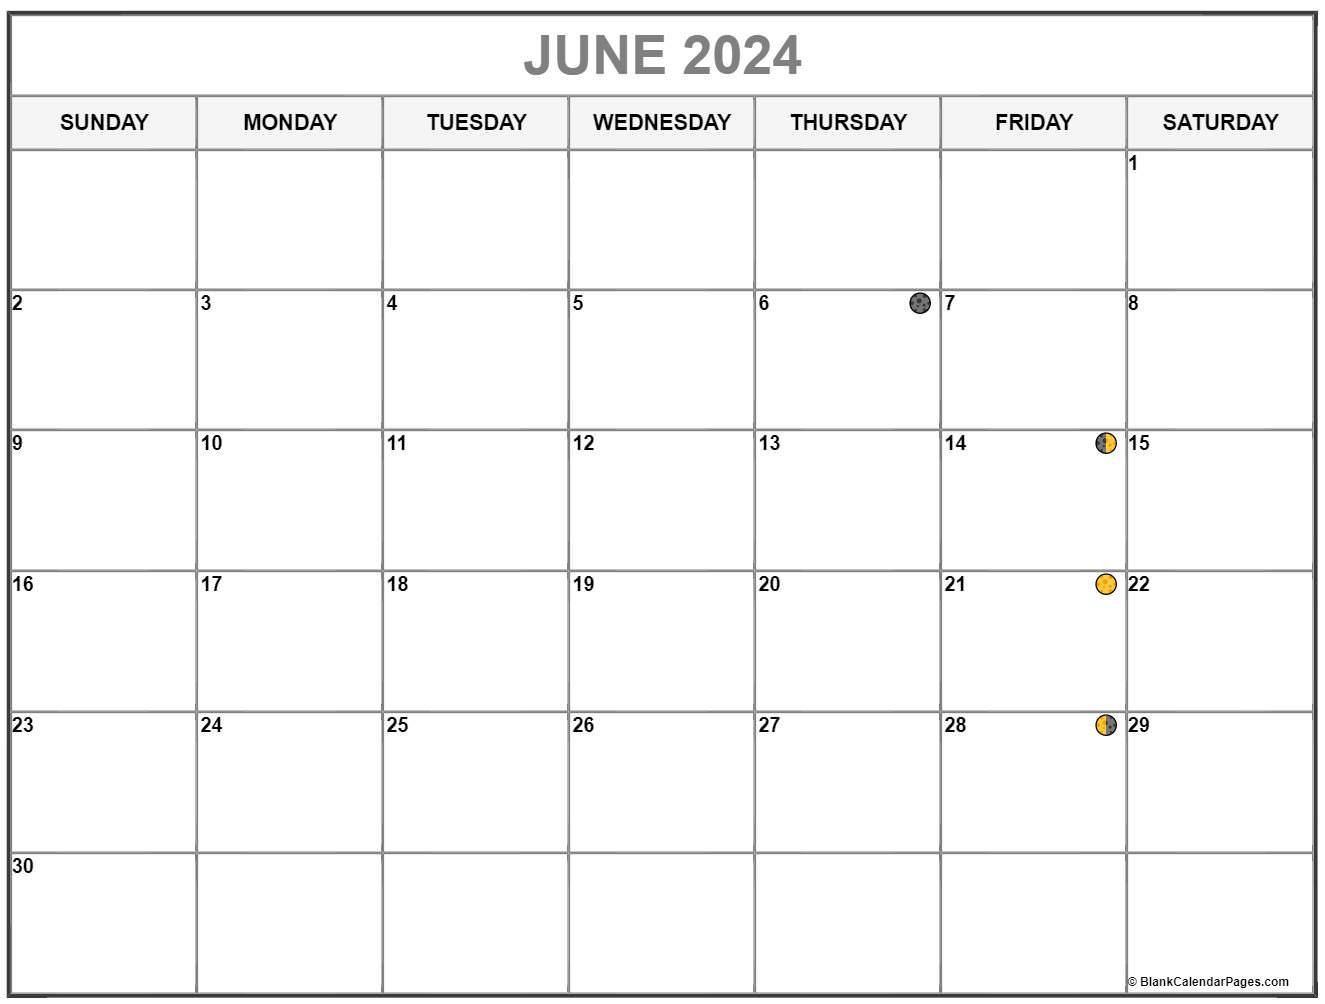 June 2024 Lunar Calendar | Moon Phase Calendar